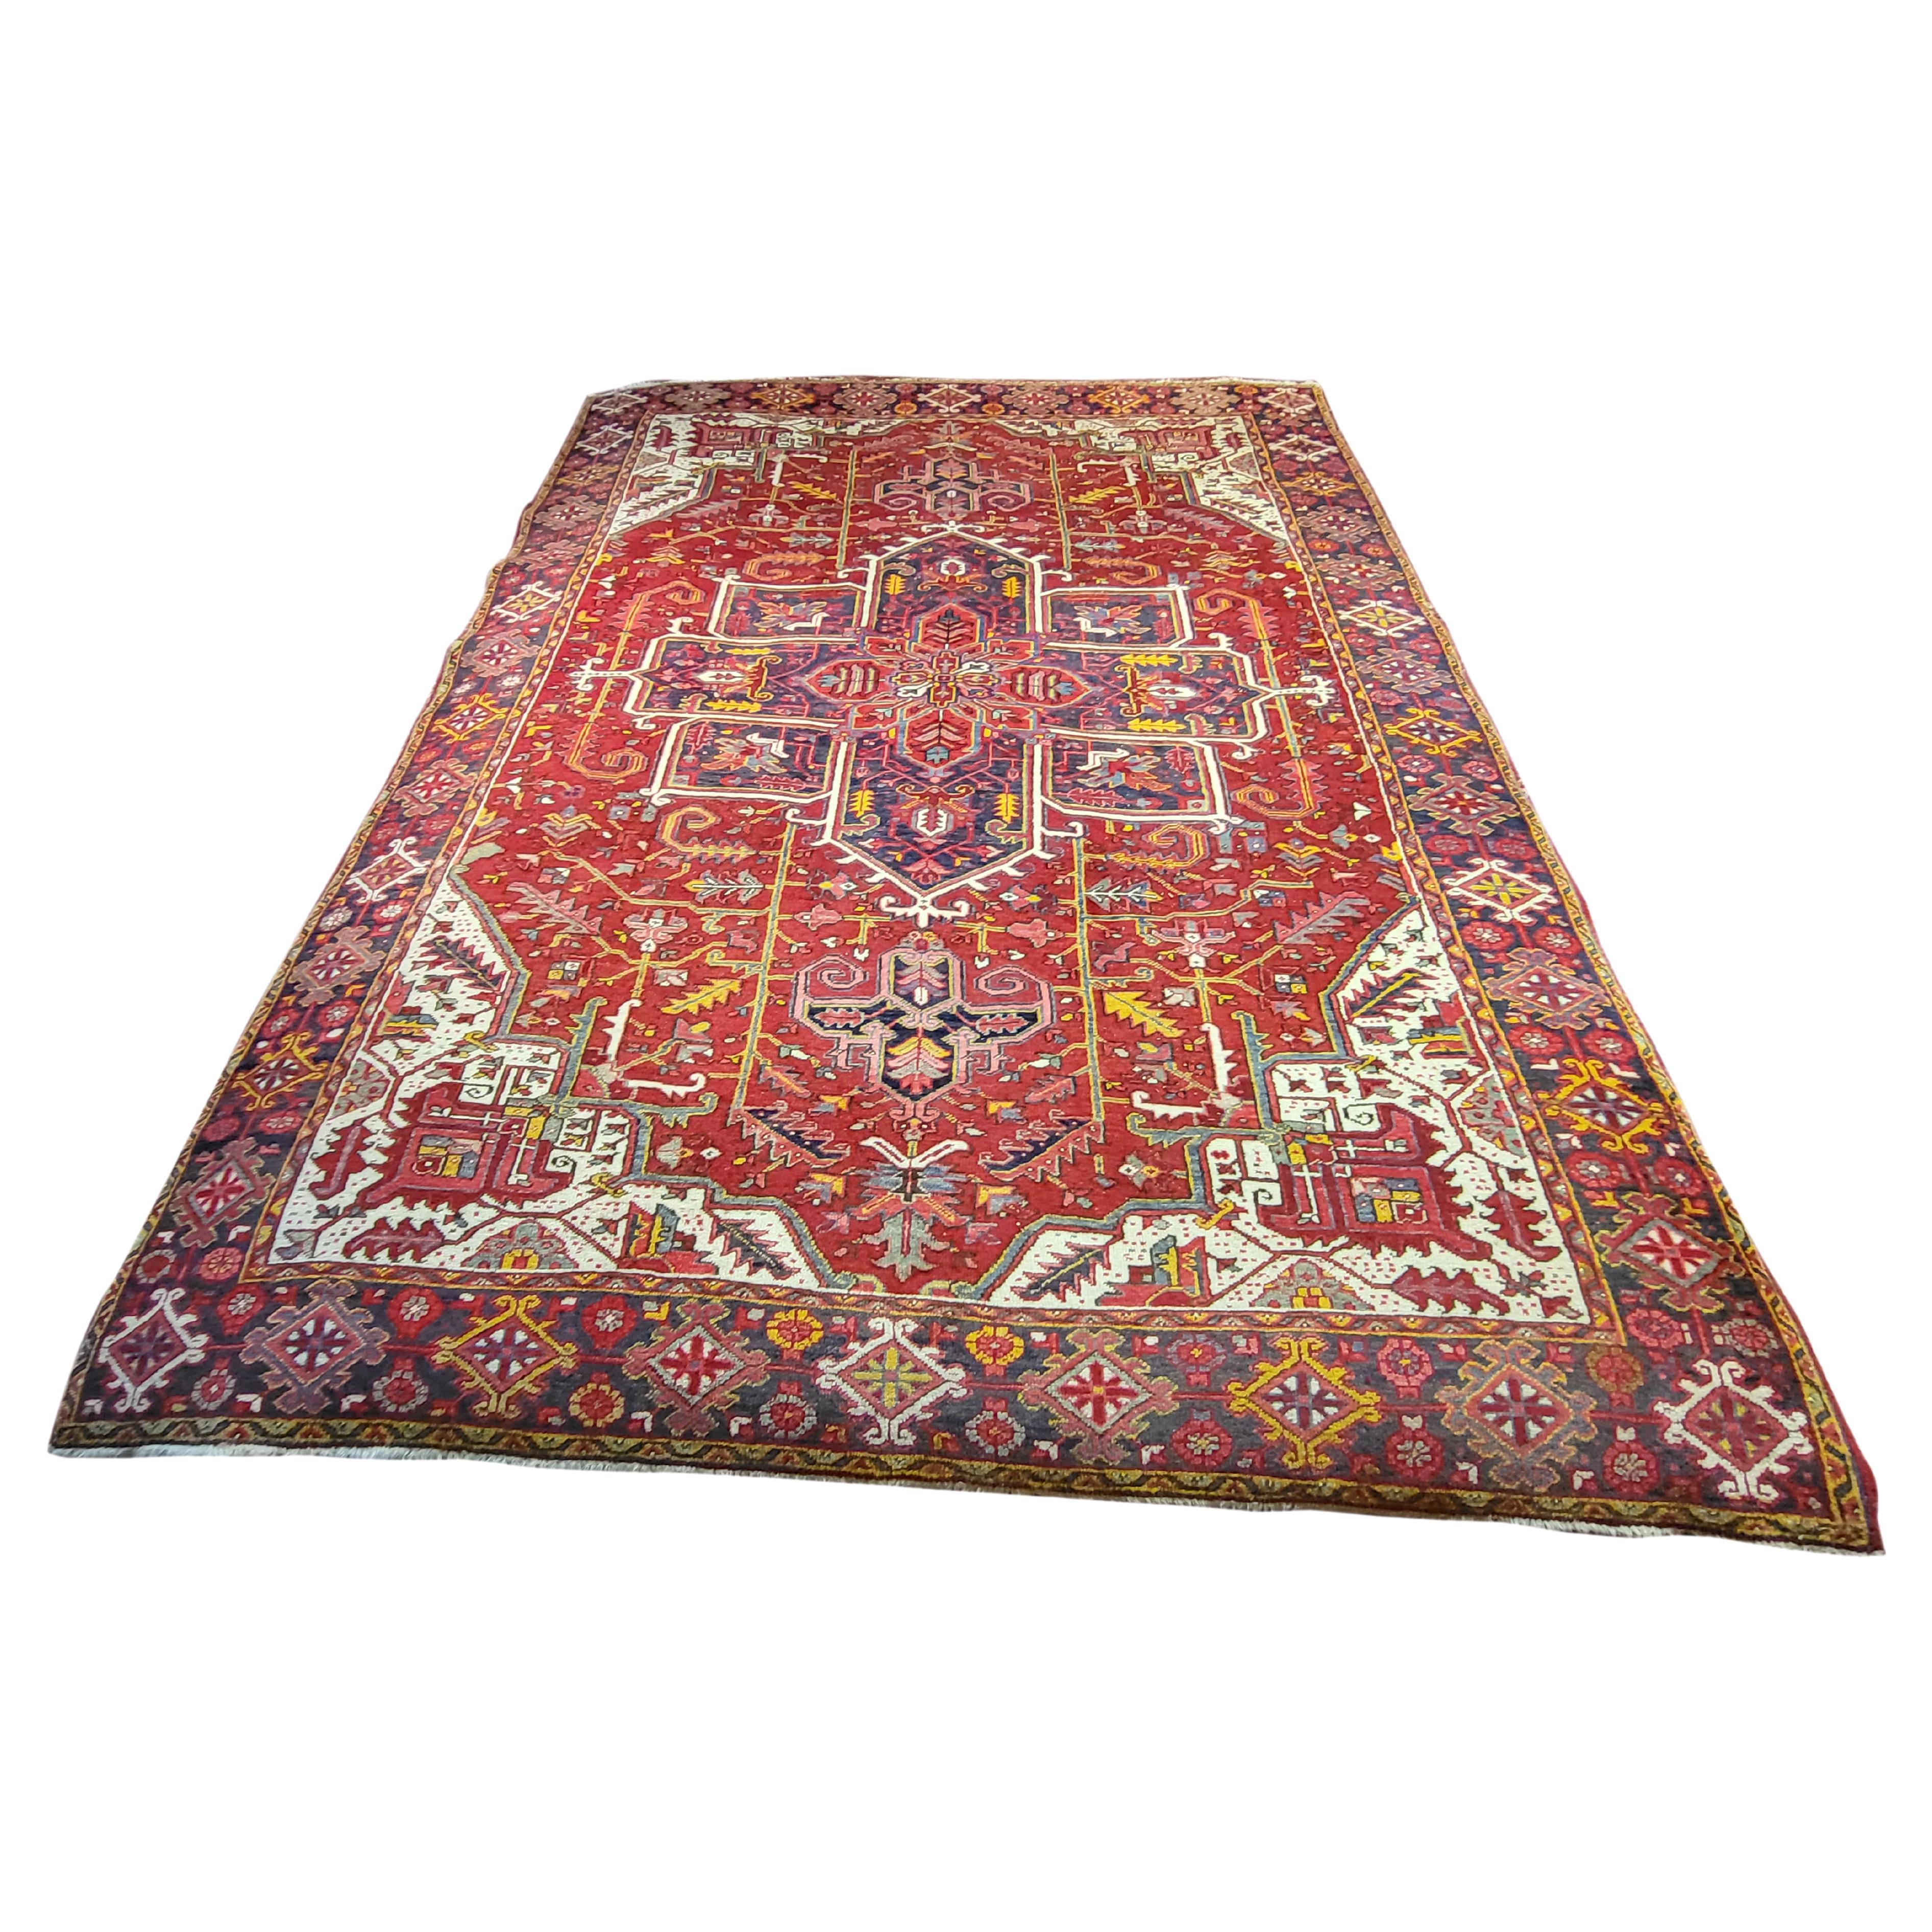 12'x9' Antique Colorful Persian Heriz - Serapi For Sale